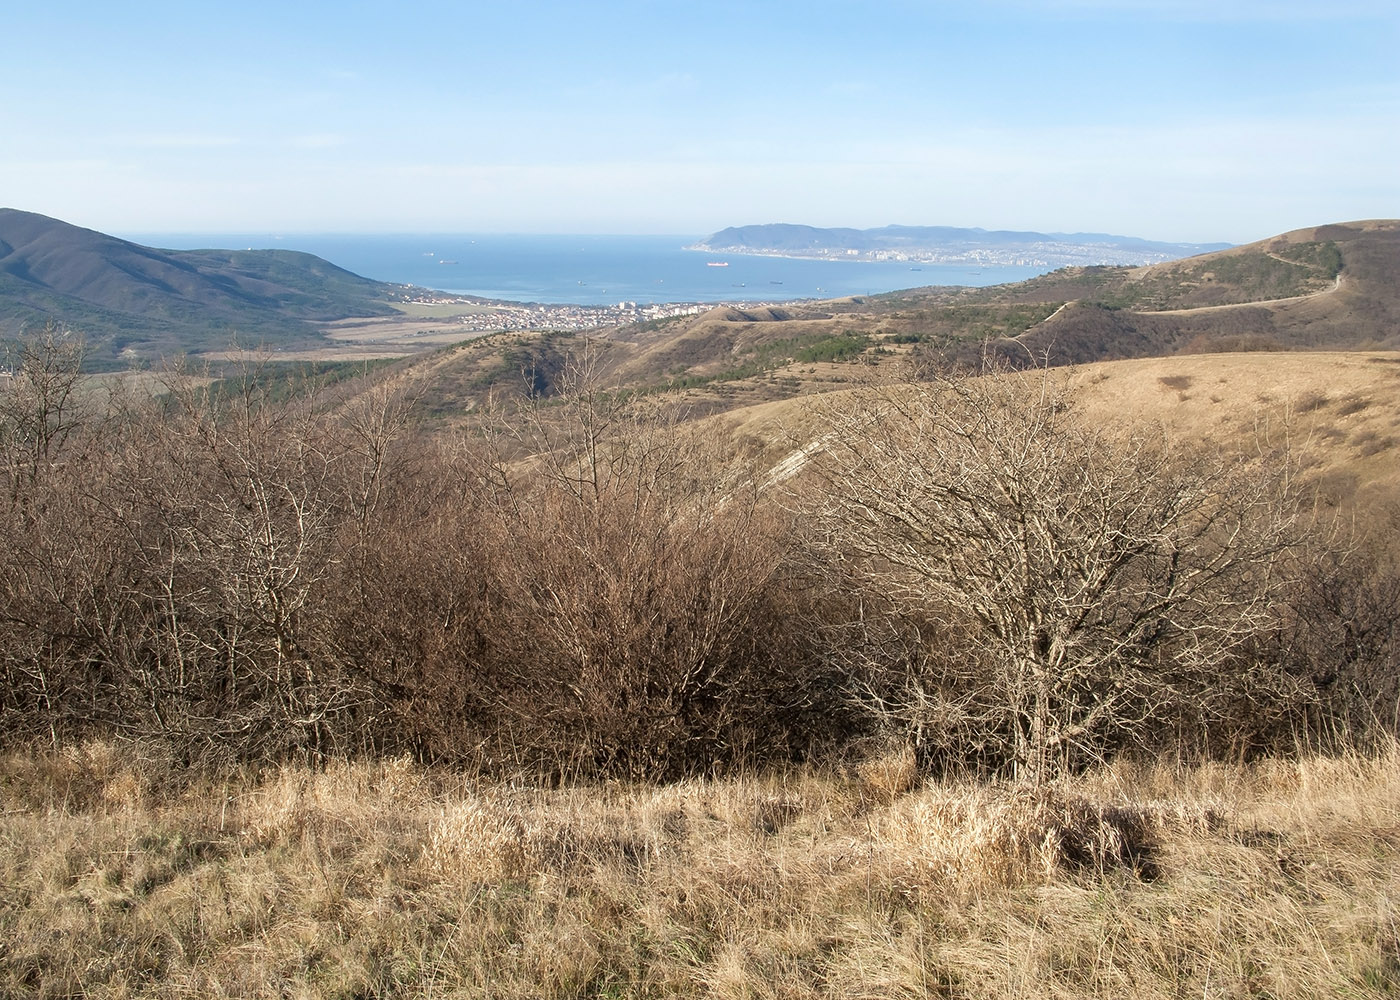 Урочище Солдатский Бугор, изображение ландшафта.